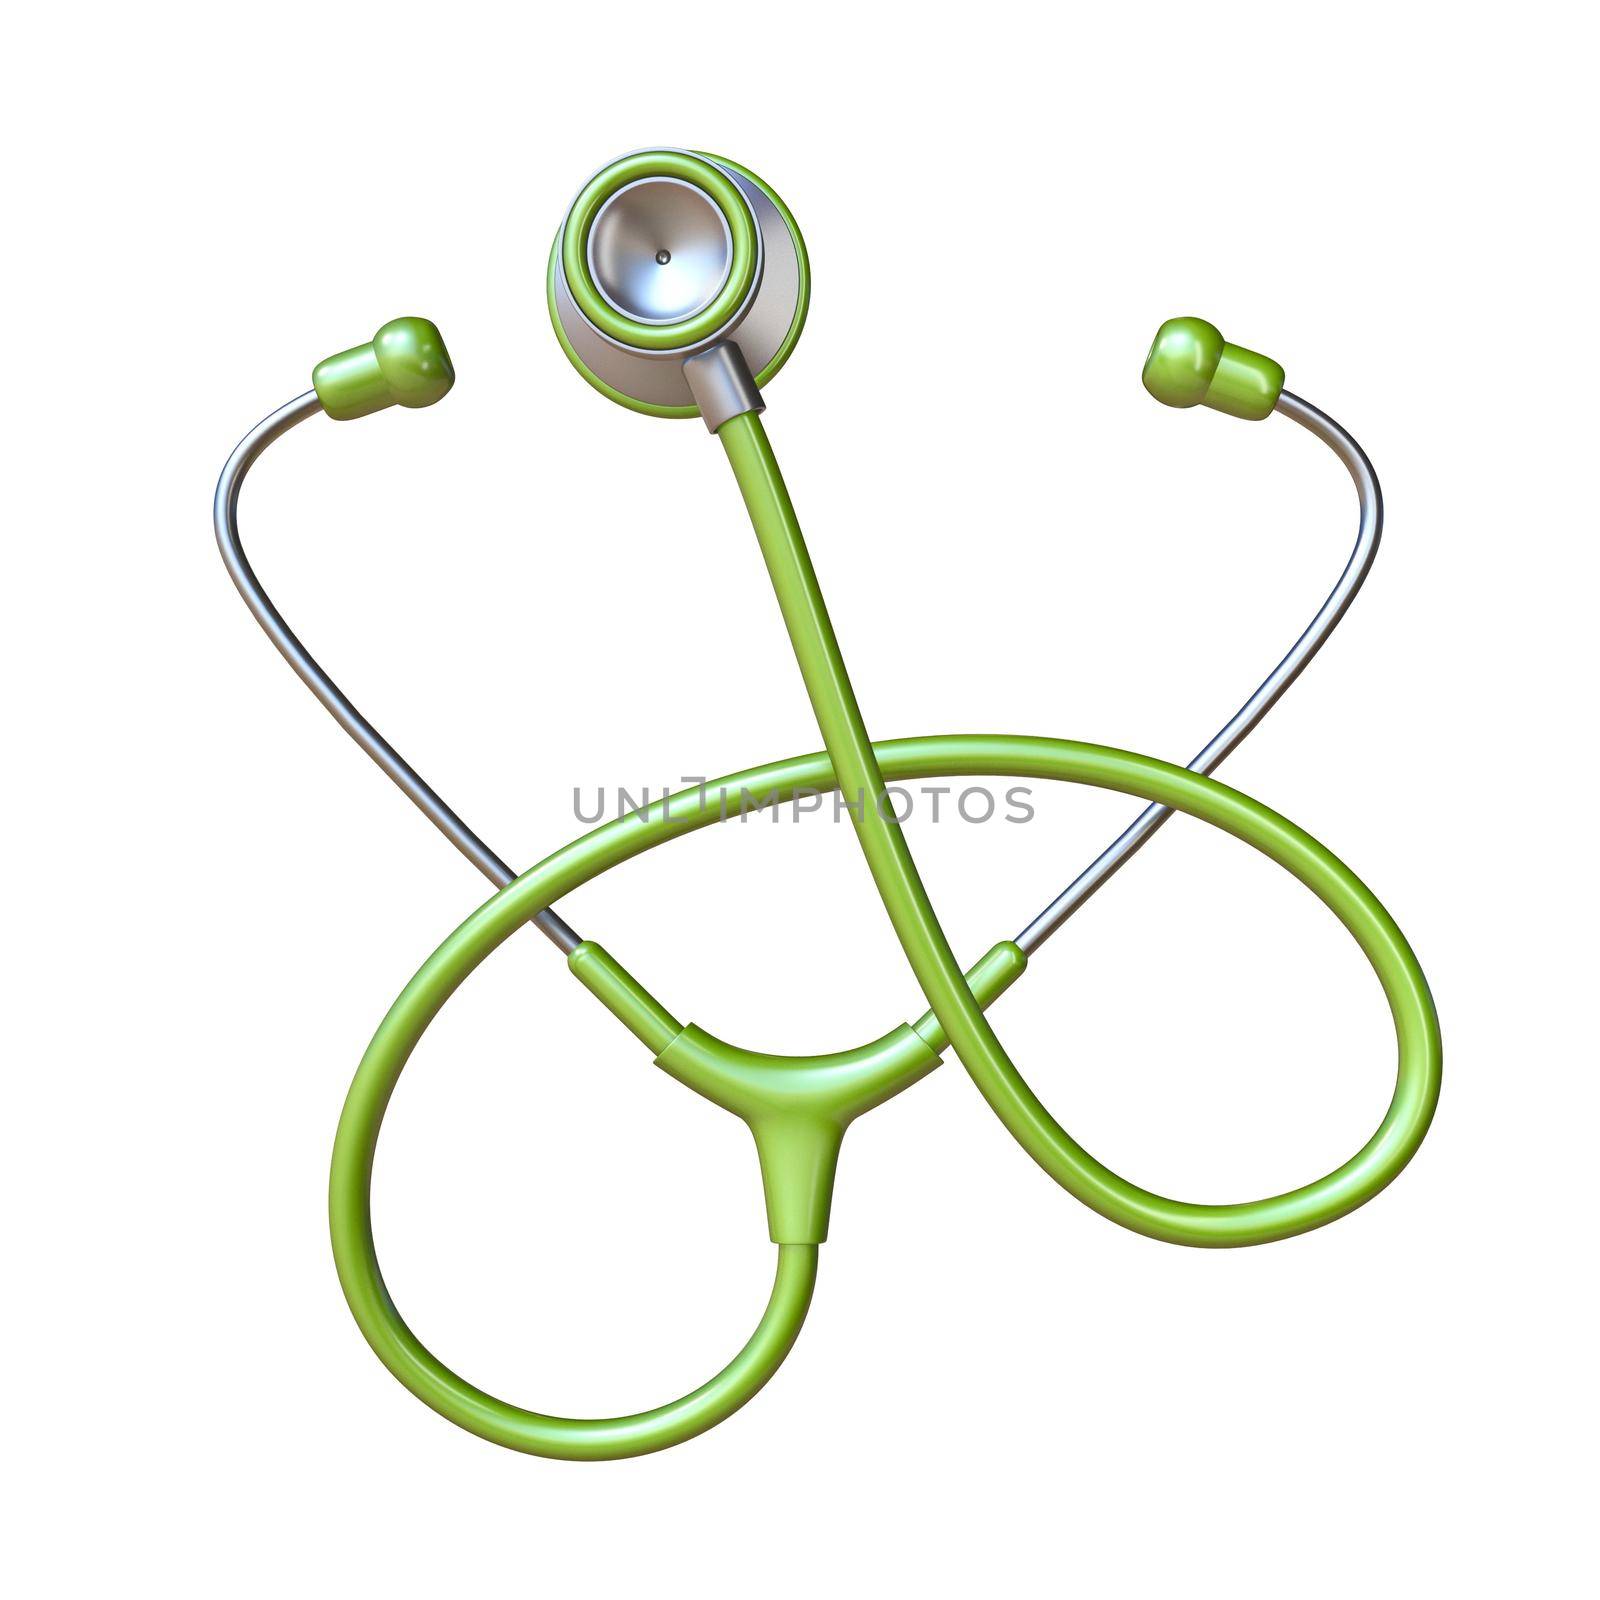 Green stethoscope 3D rendering illustration isolated on white background